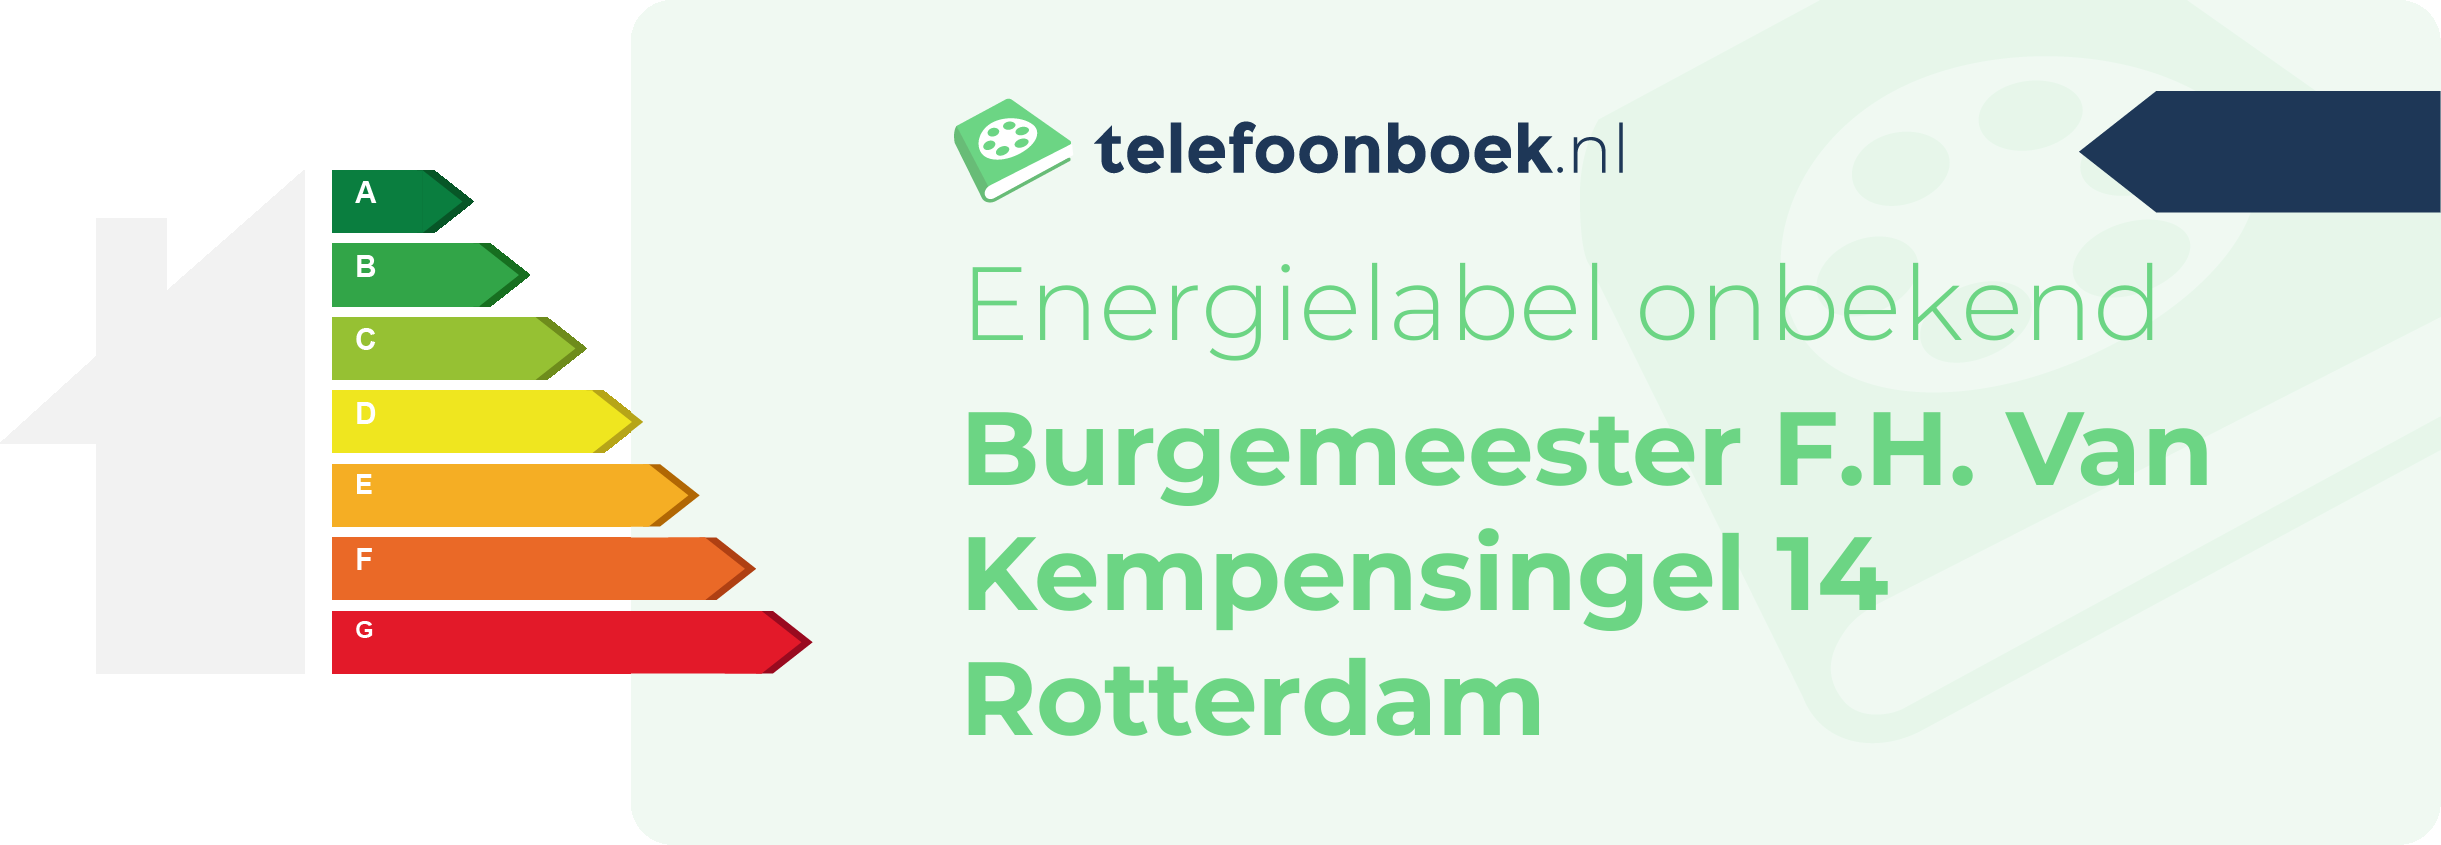 Energielabel Burgemeester F.H. Van Kempensingel 14 Rotterdam